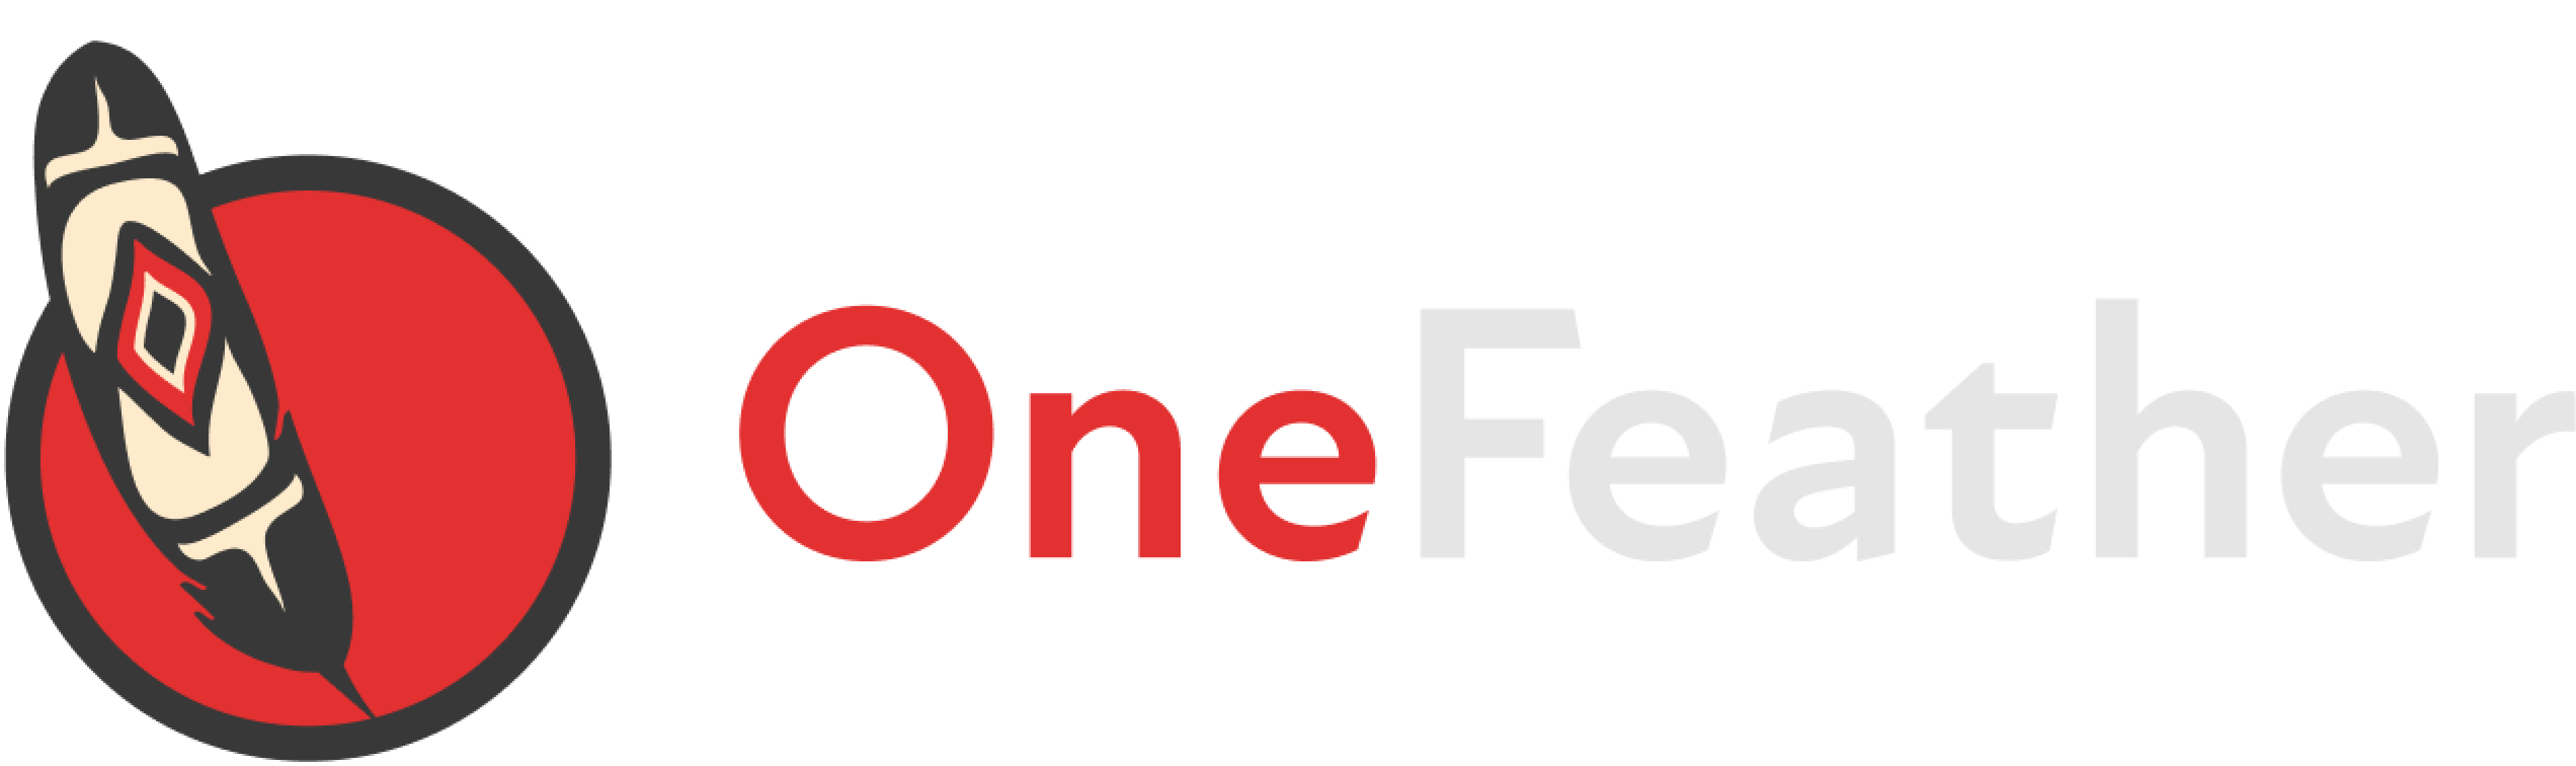 oneFeather logo